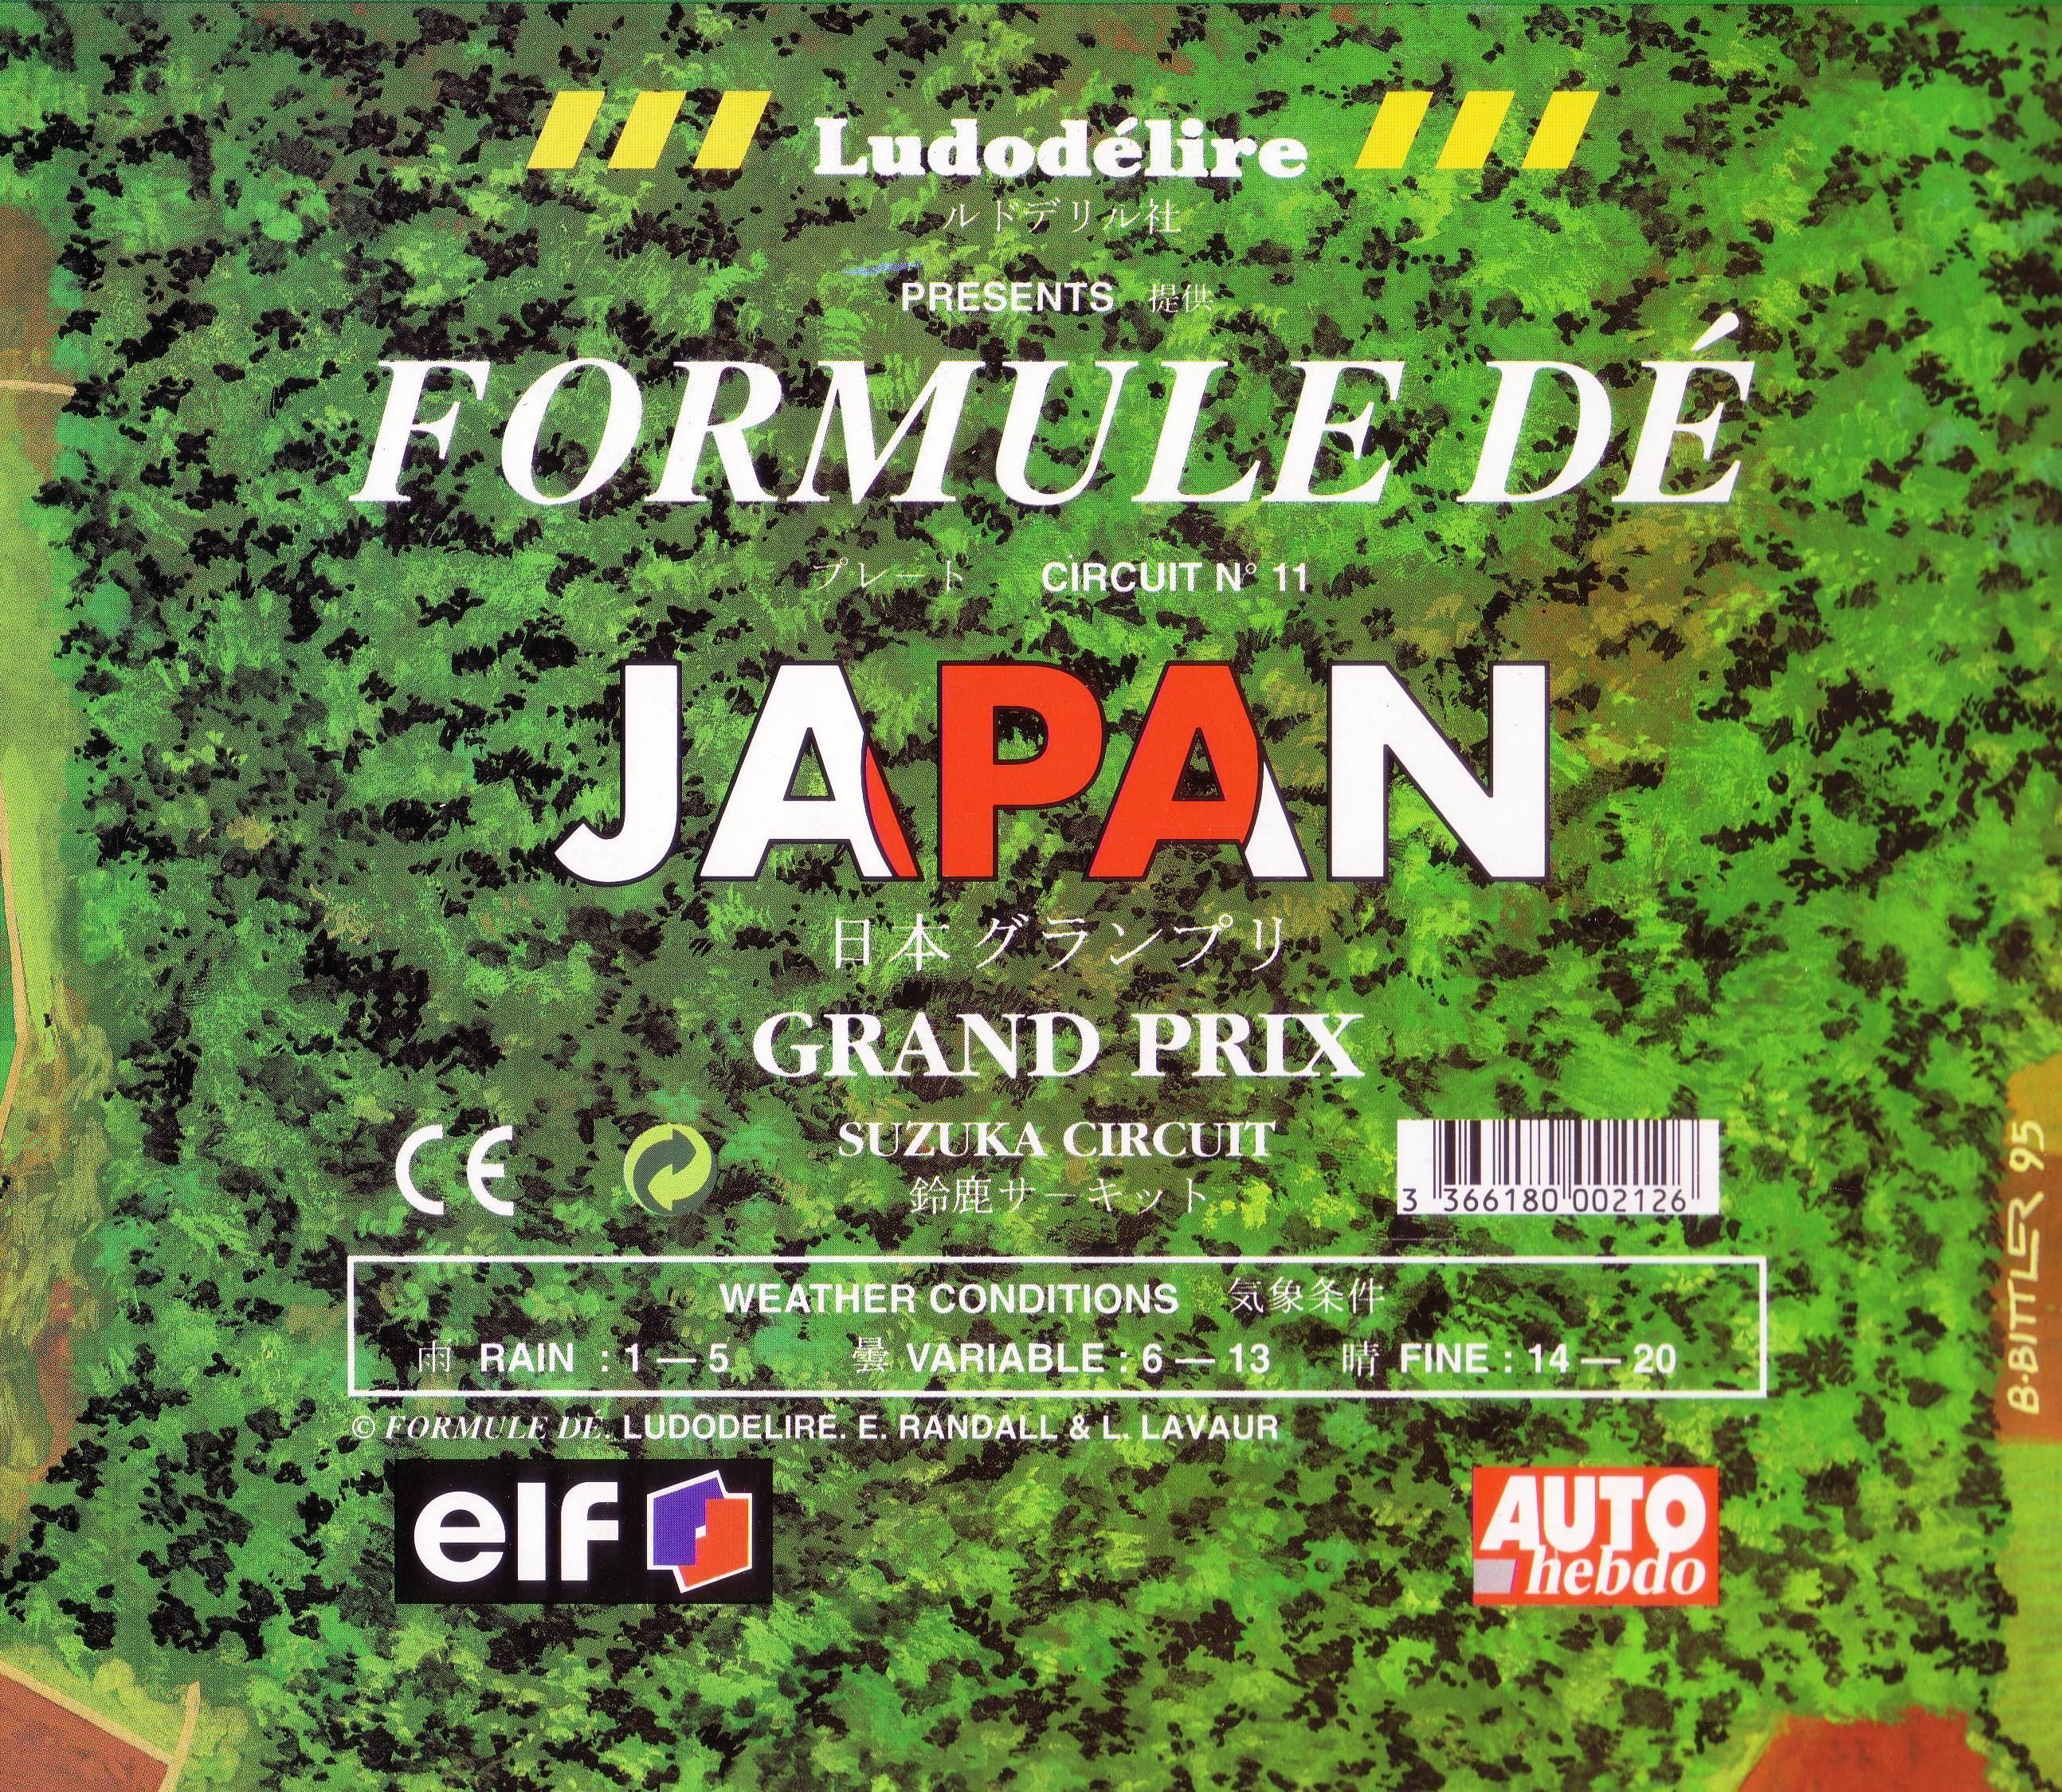 Formule Dé Circuit № 11: JAPAN GRAND PRIX – Suzuka Circuit